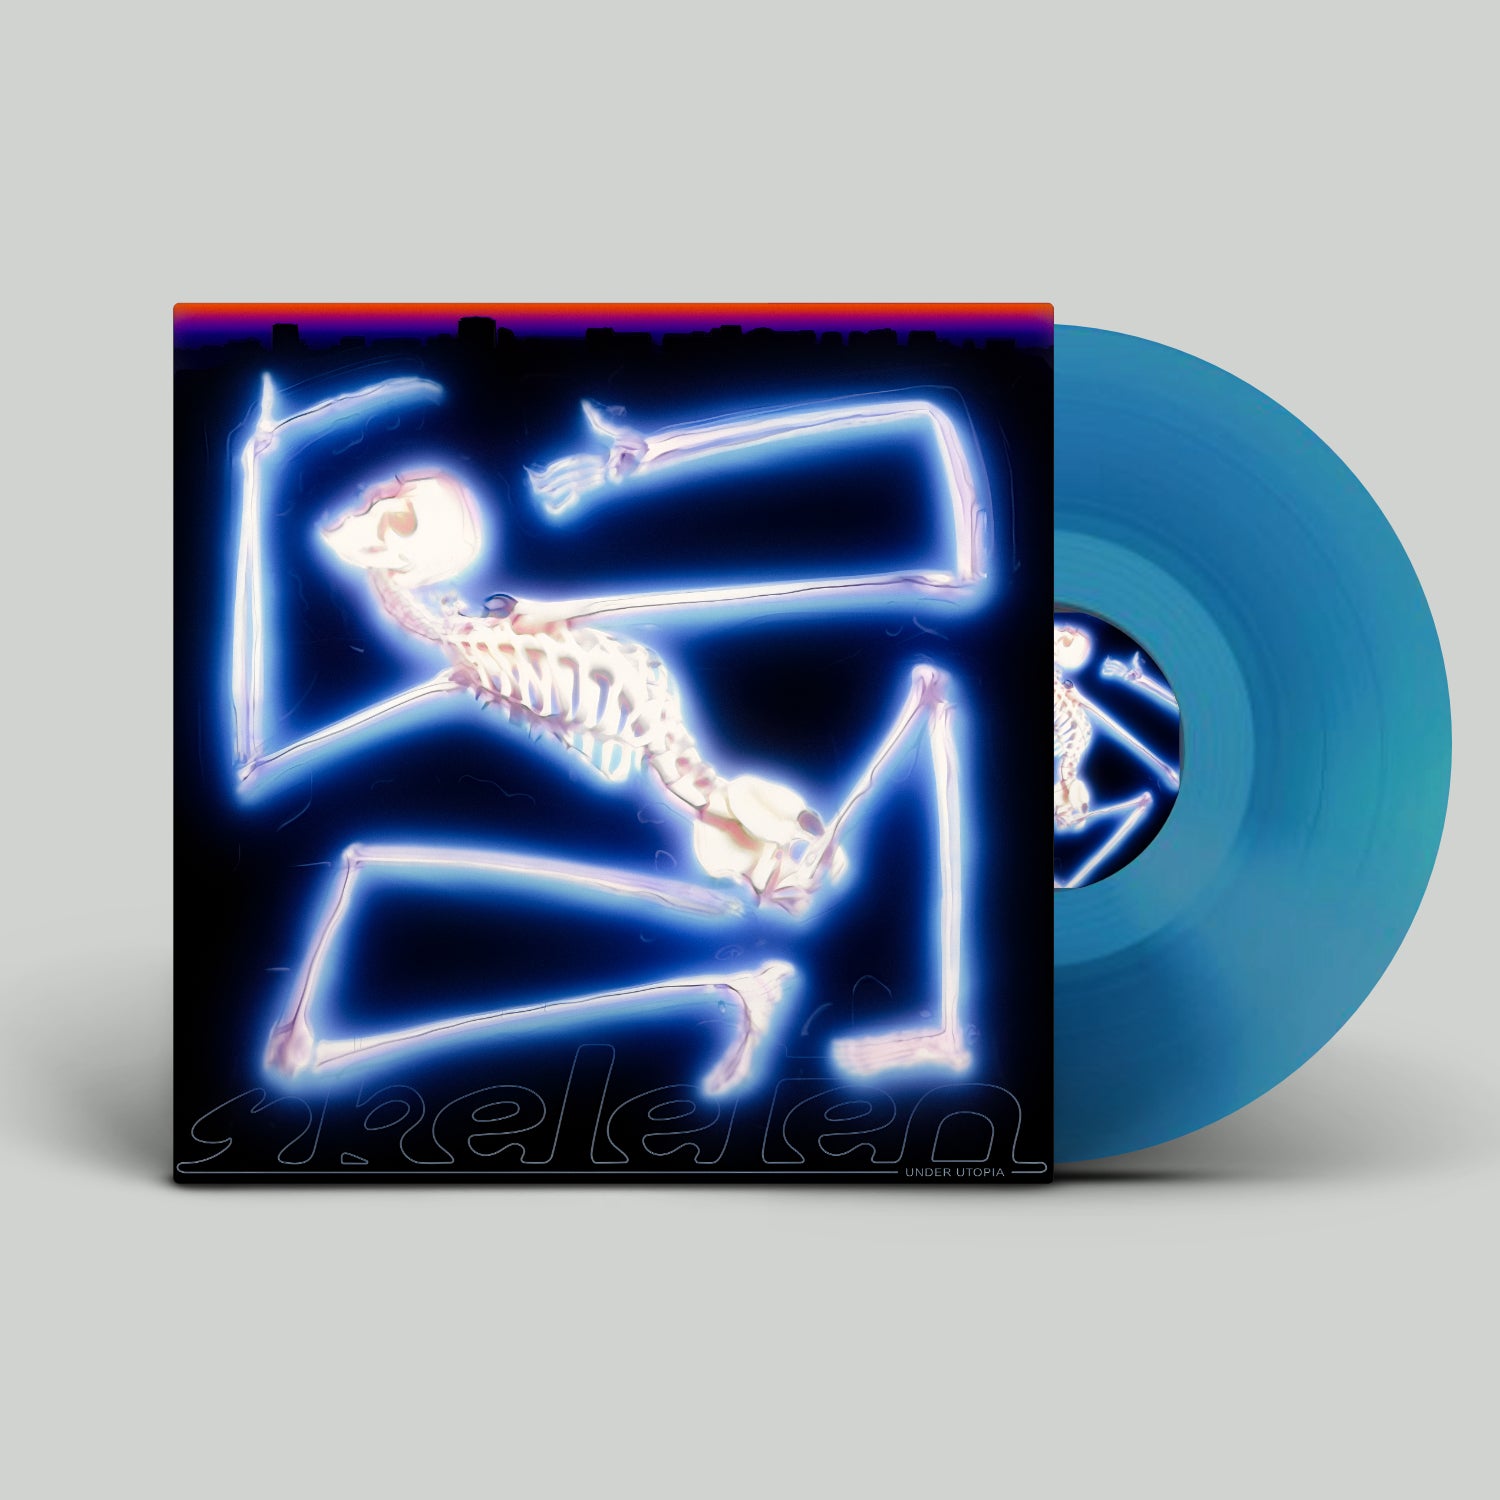 Under Utopia: Limited Edition Transparent Blue Vinyl LP